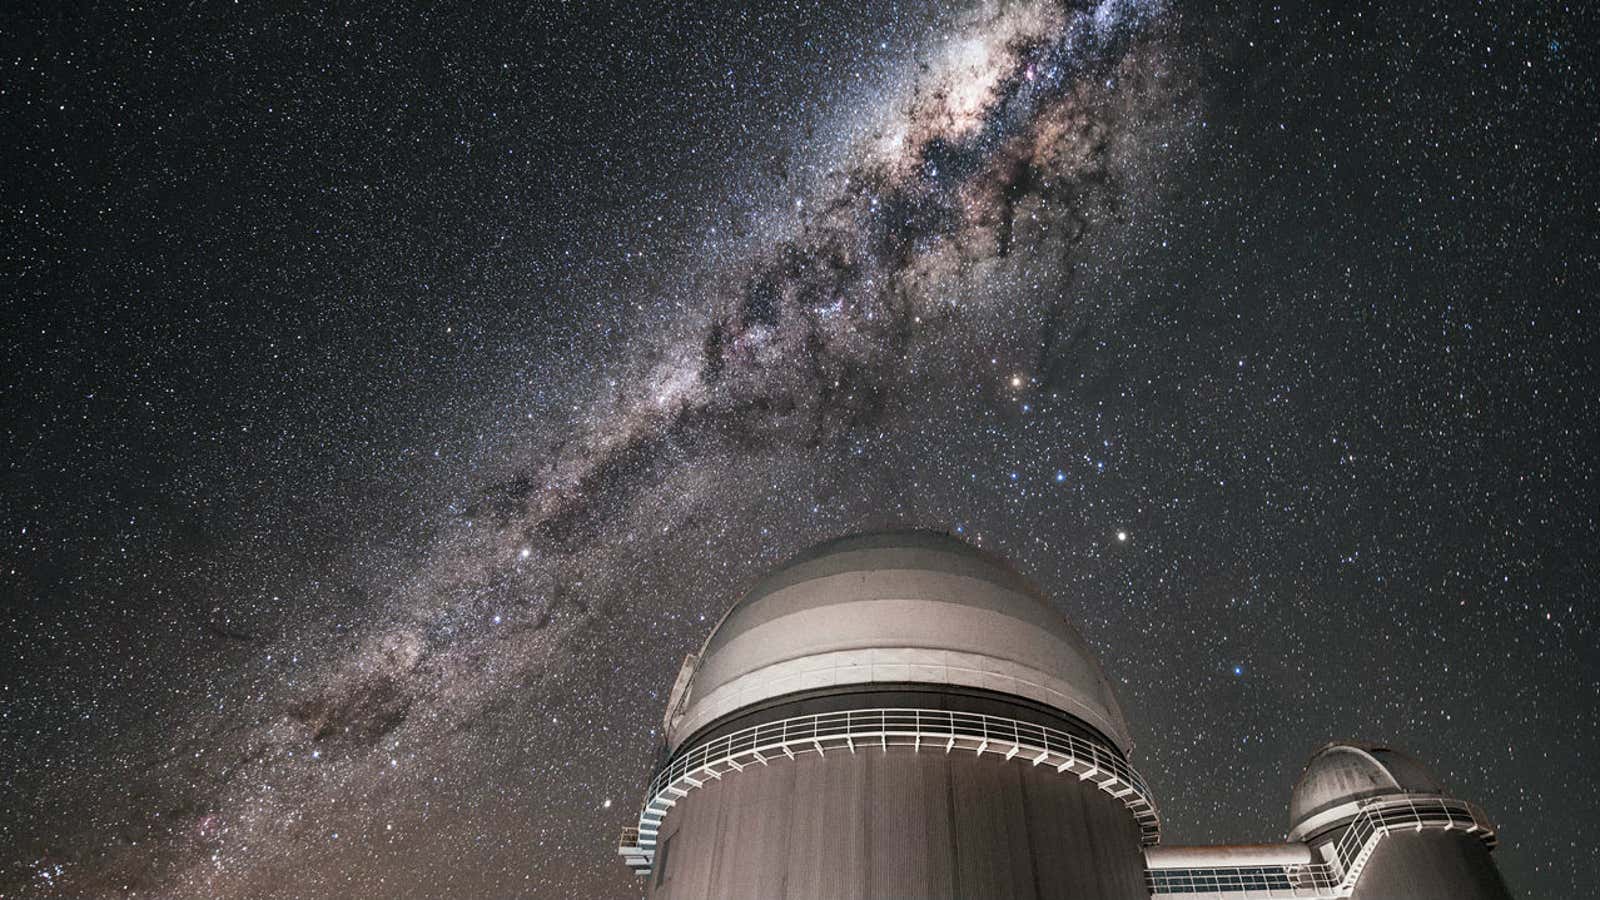 Epic stargazing at La Silla Observatory.